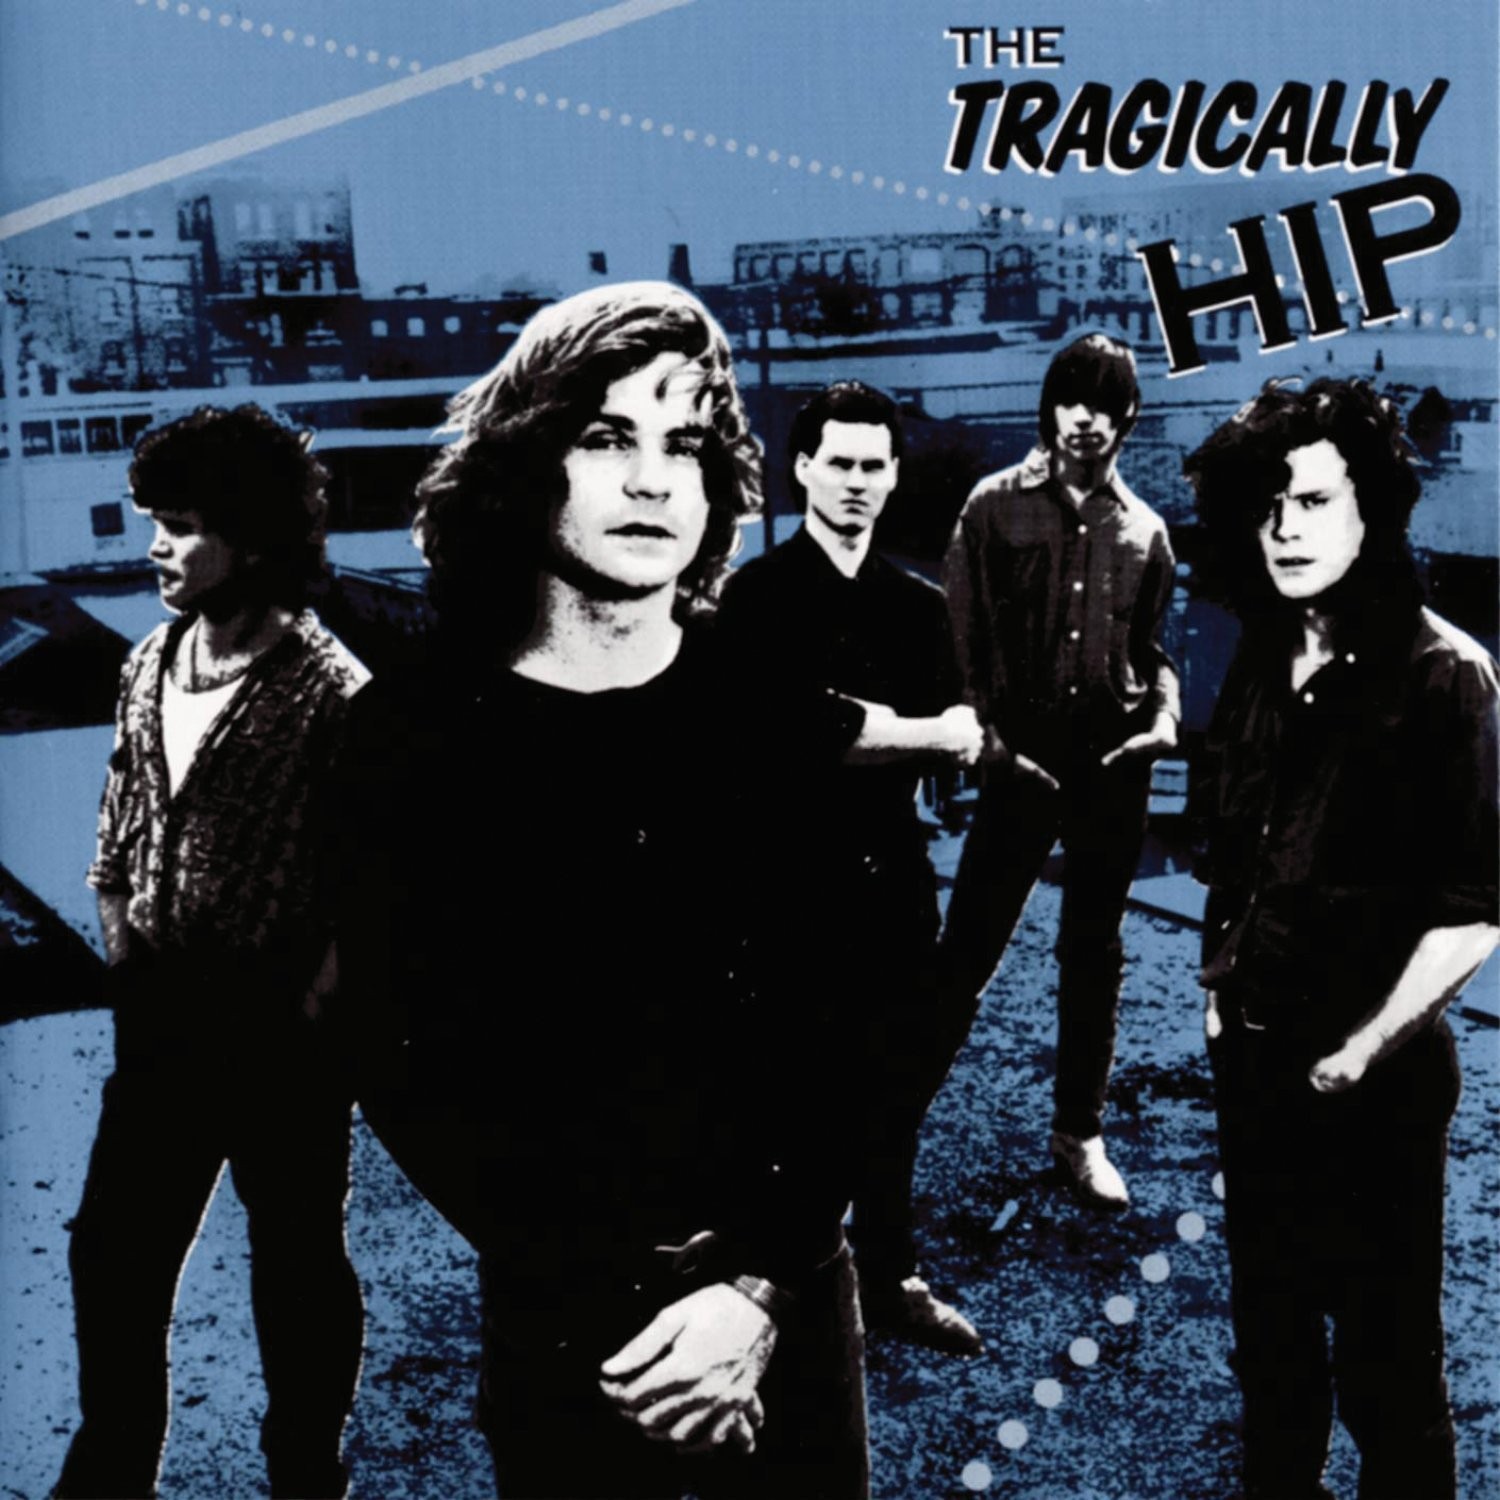 The Tragically Hip - The Tragically Hip LP